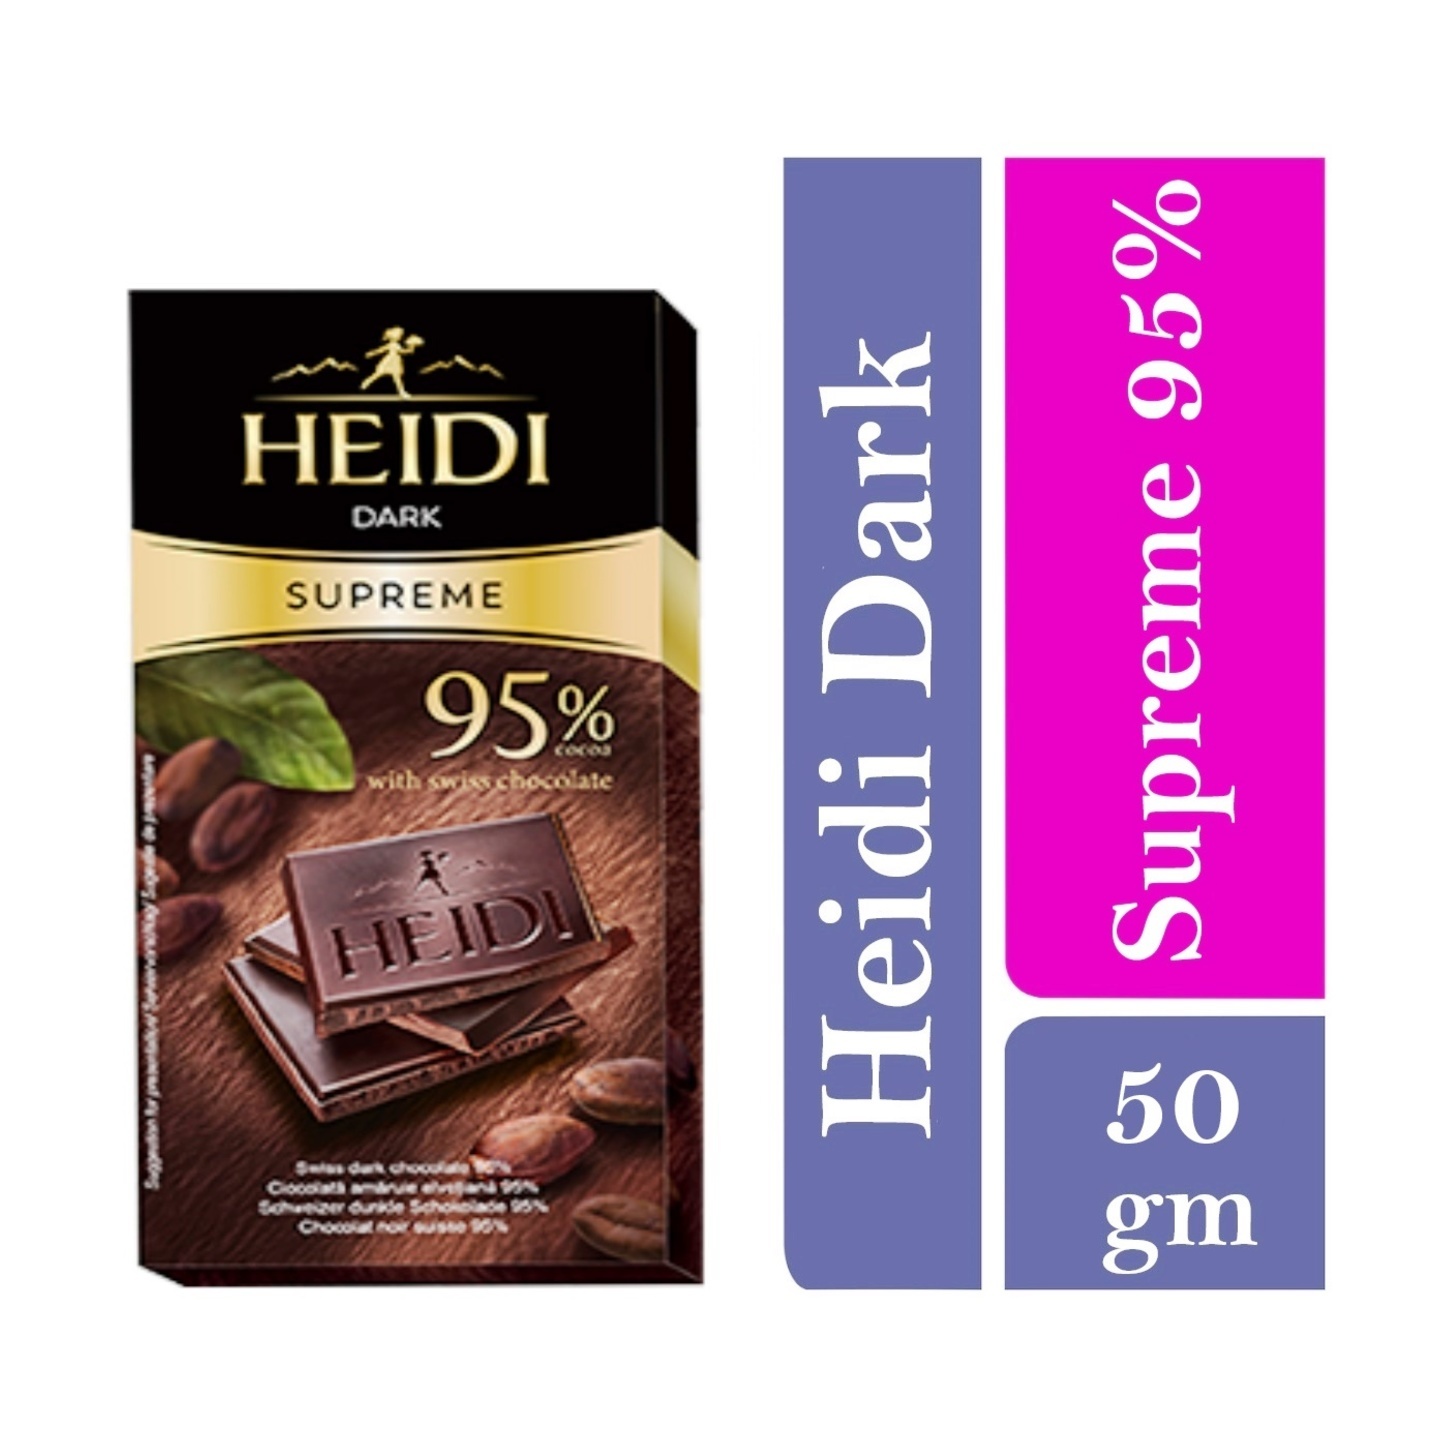 Heidi Supreme Dark Chocolate Bar 95% 1 x 50gm